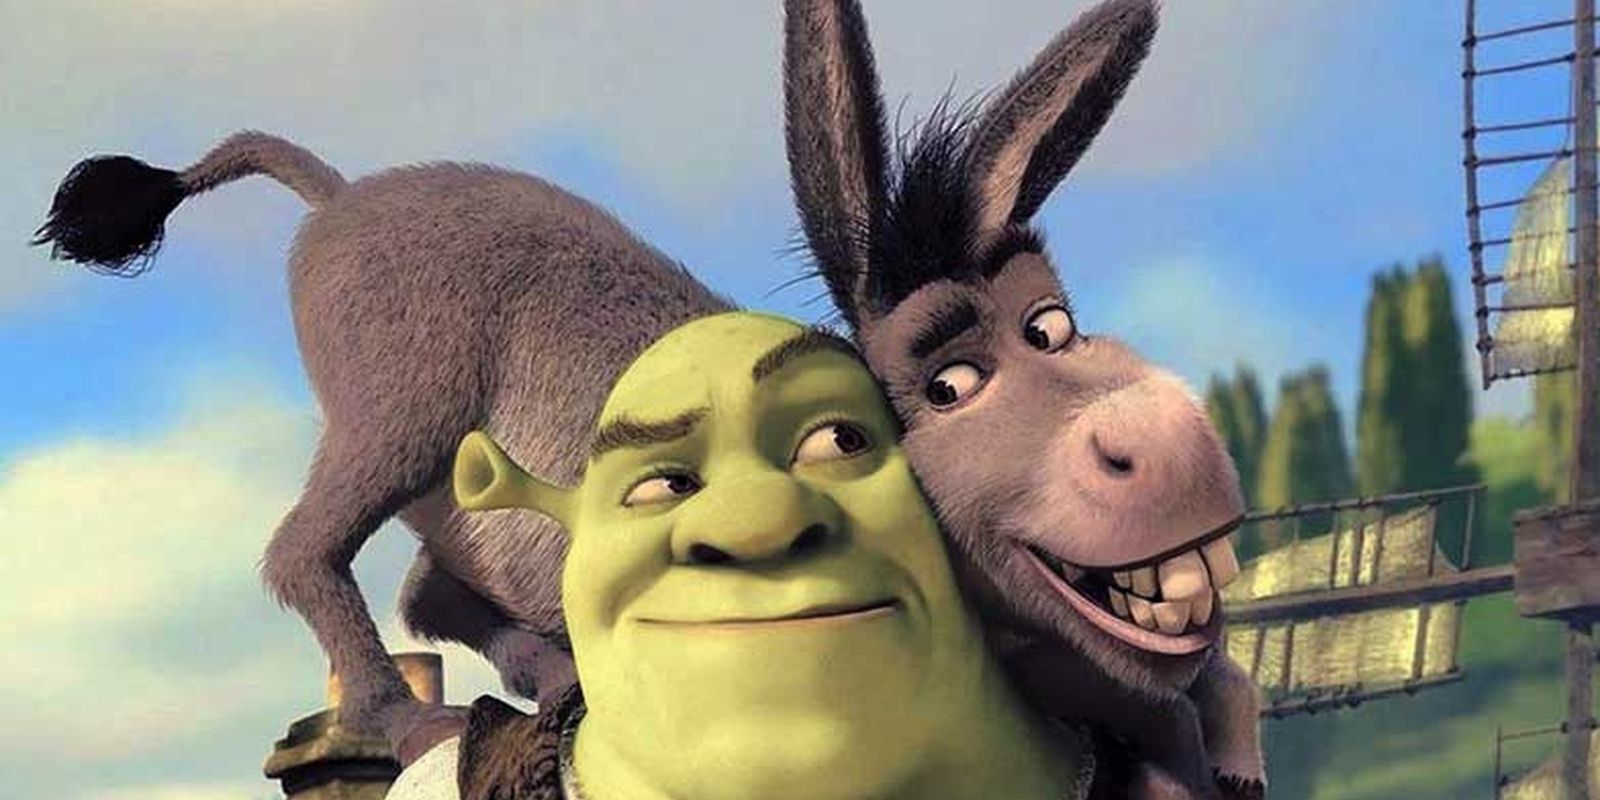 Shrek and Donkey in DreamWorks' Shrek